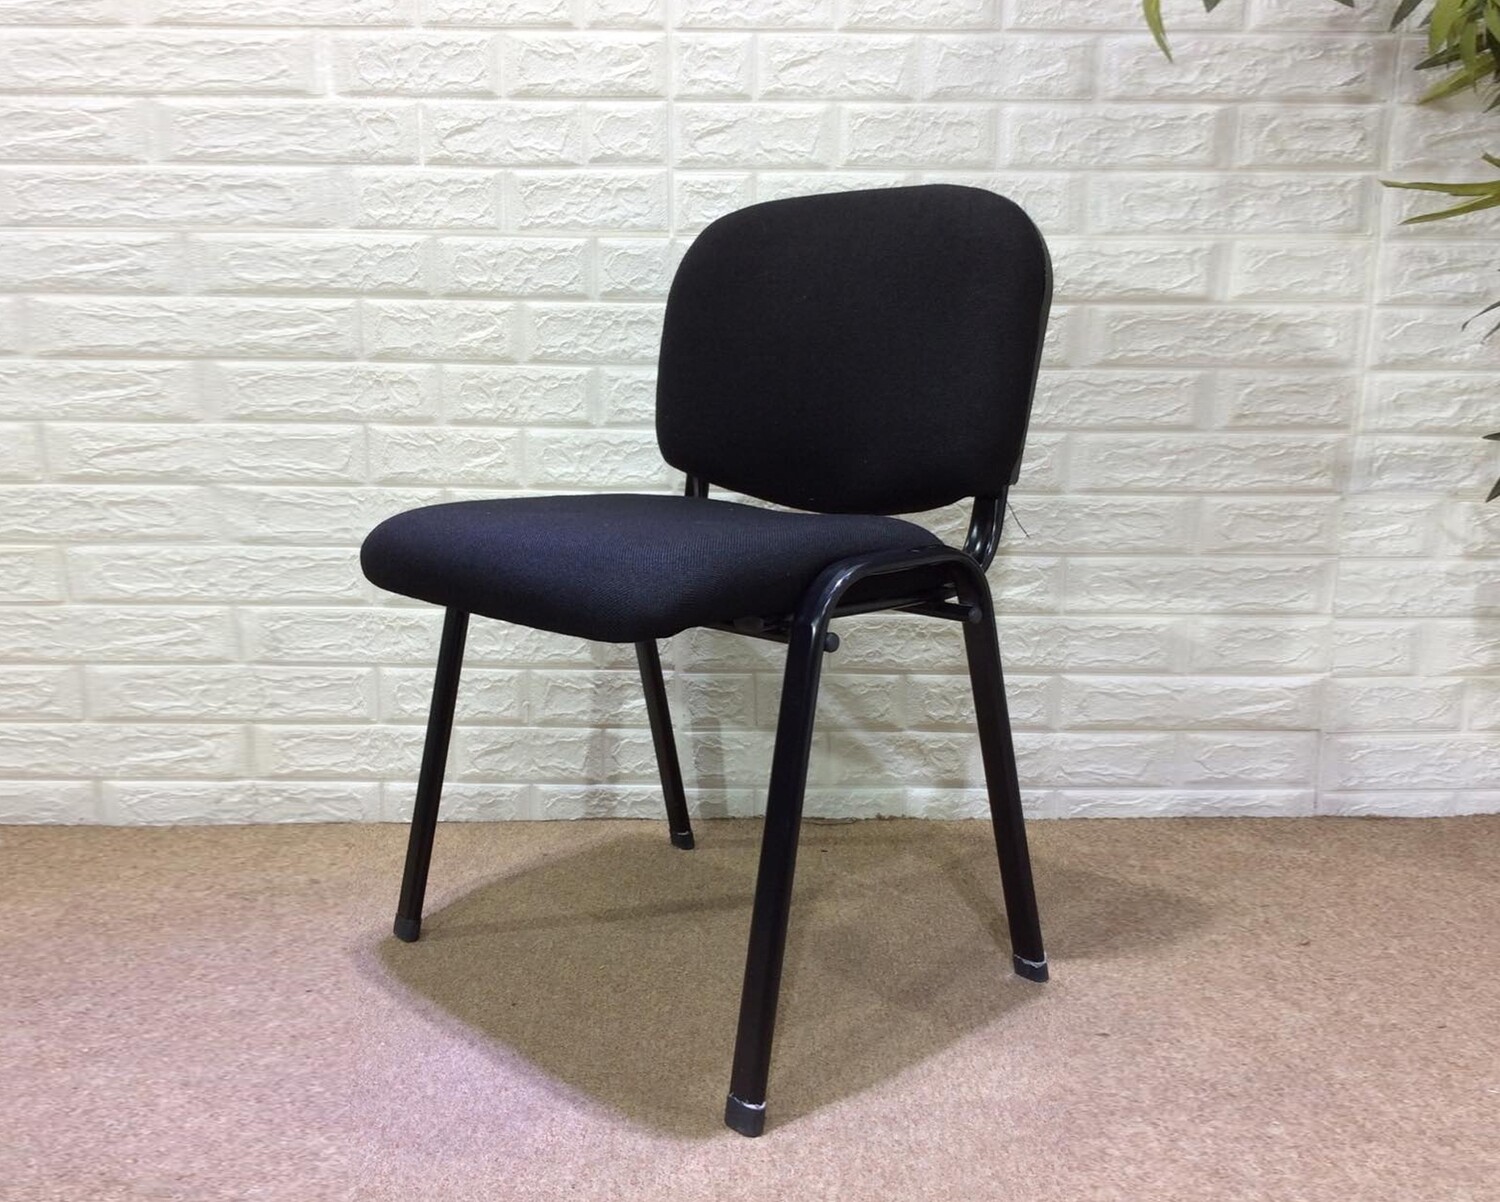 Ofix Deluxe-32W School/Waiting Chair (Black, Grey)